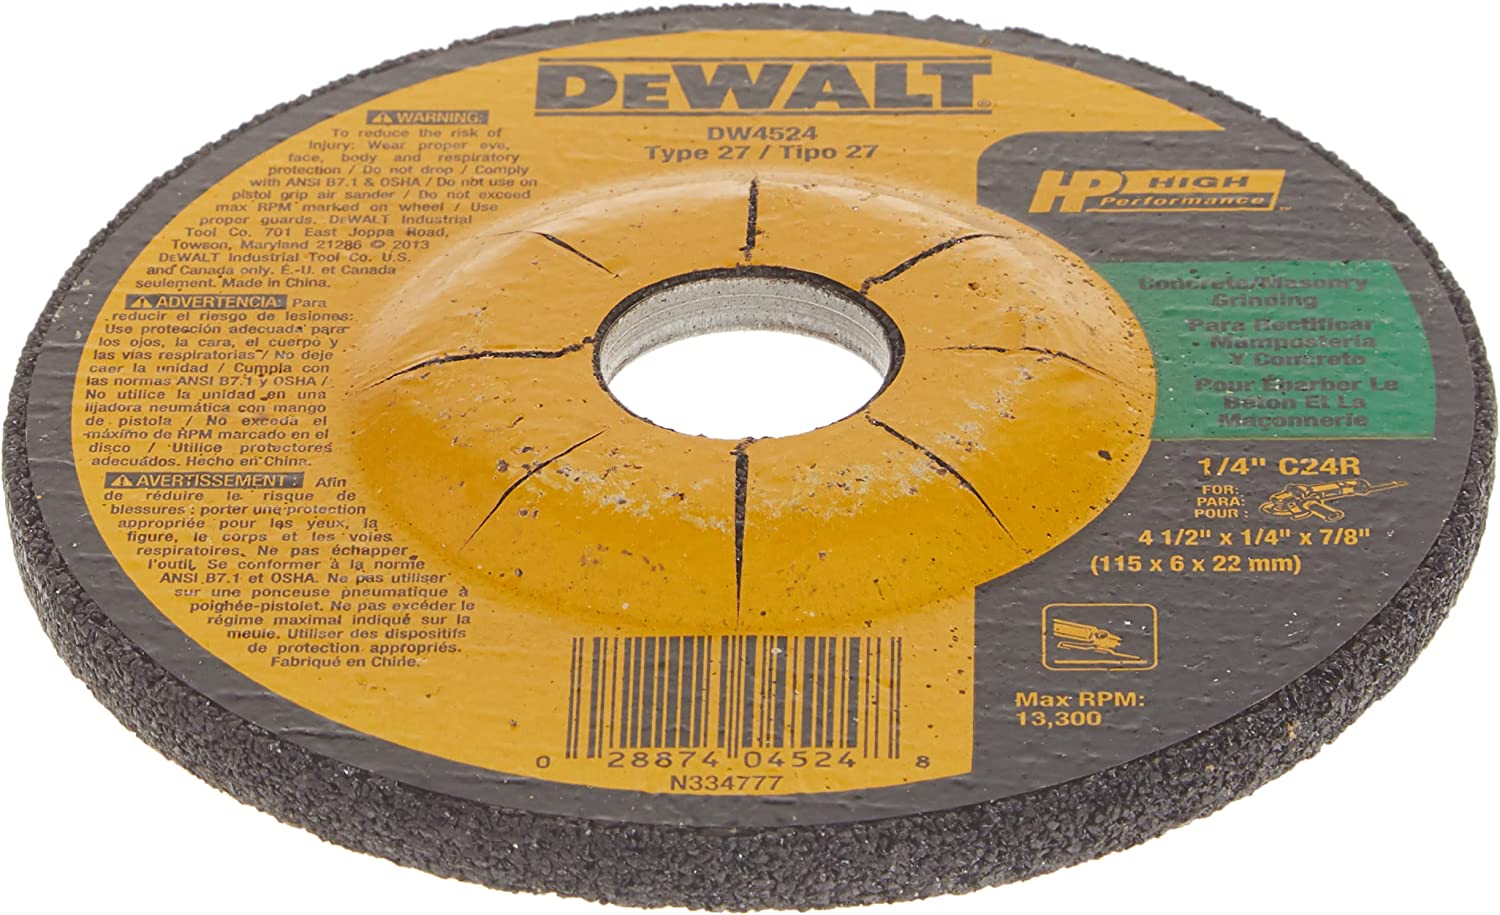 DeWALT 4 1/2" x 1/4" x 7/8" Arbor Concrete/Masonry Grinding Wheel 13,300 RPM,C24R 1